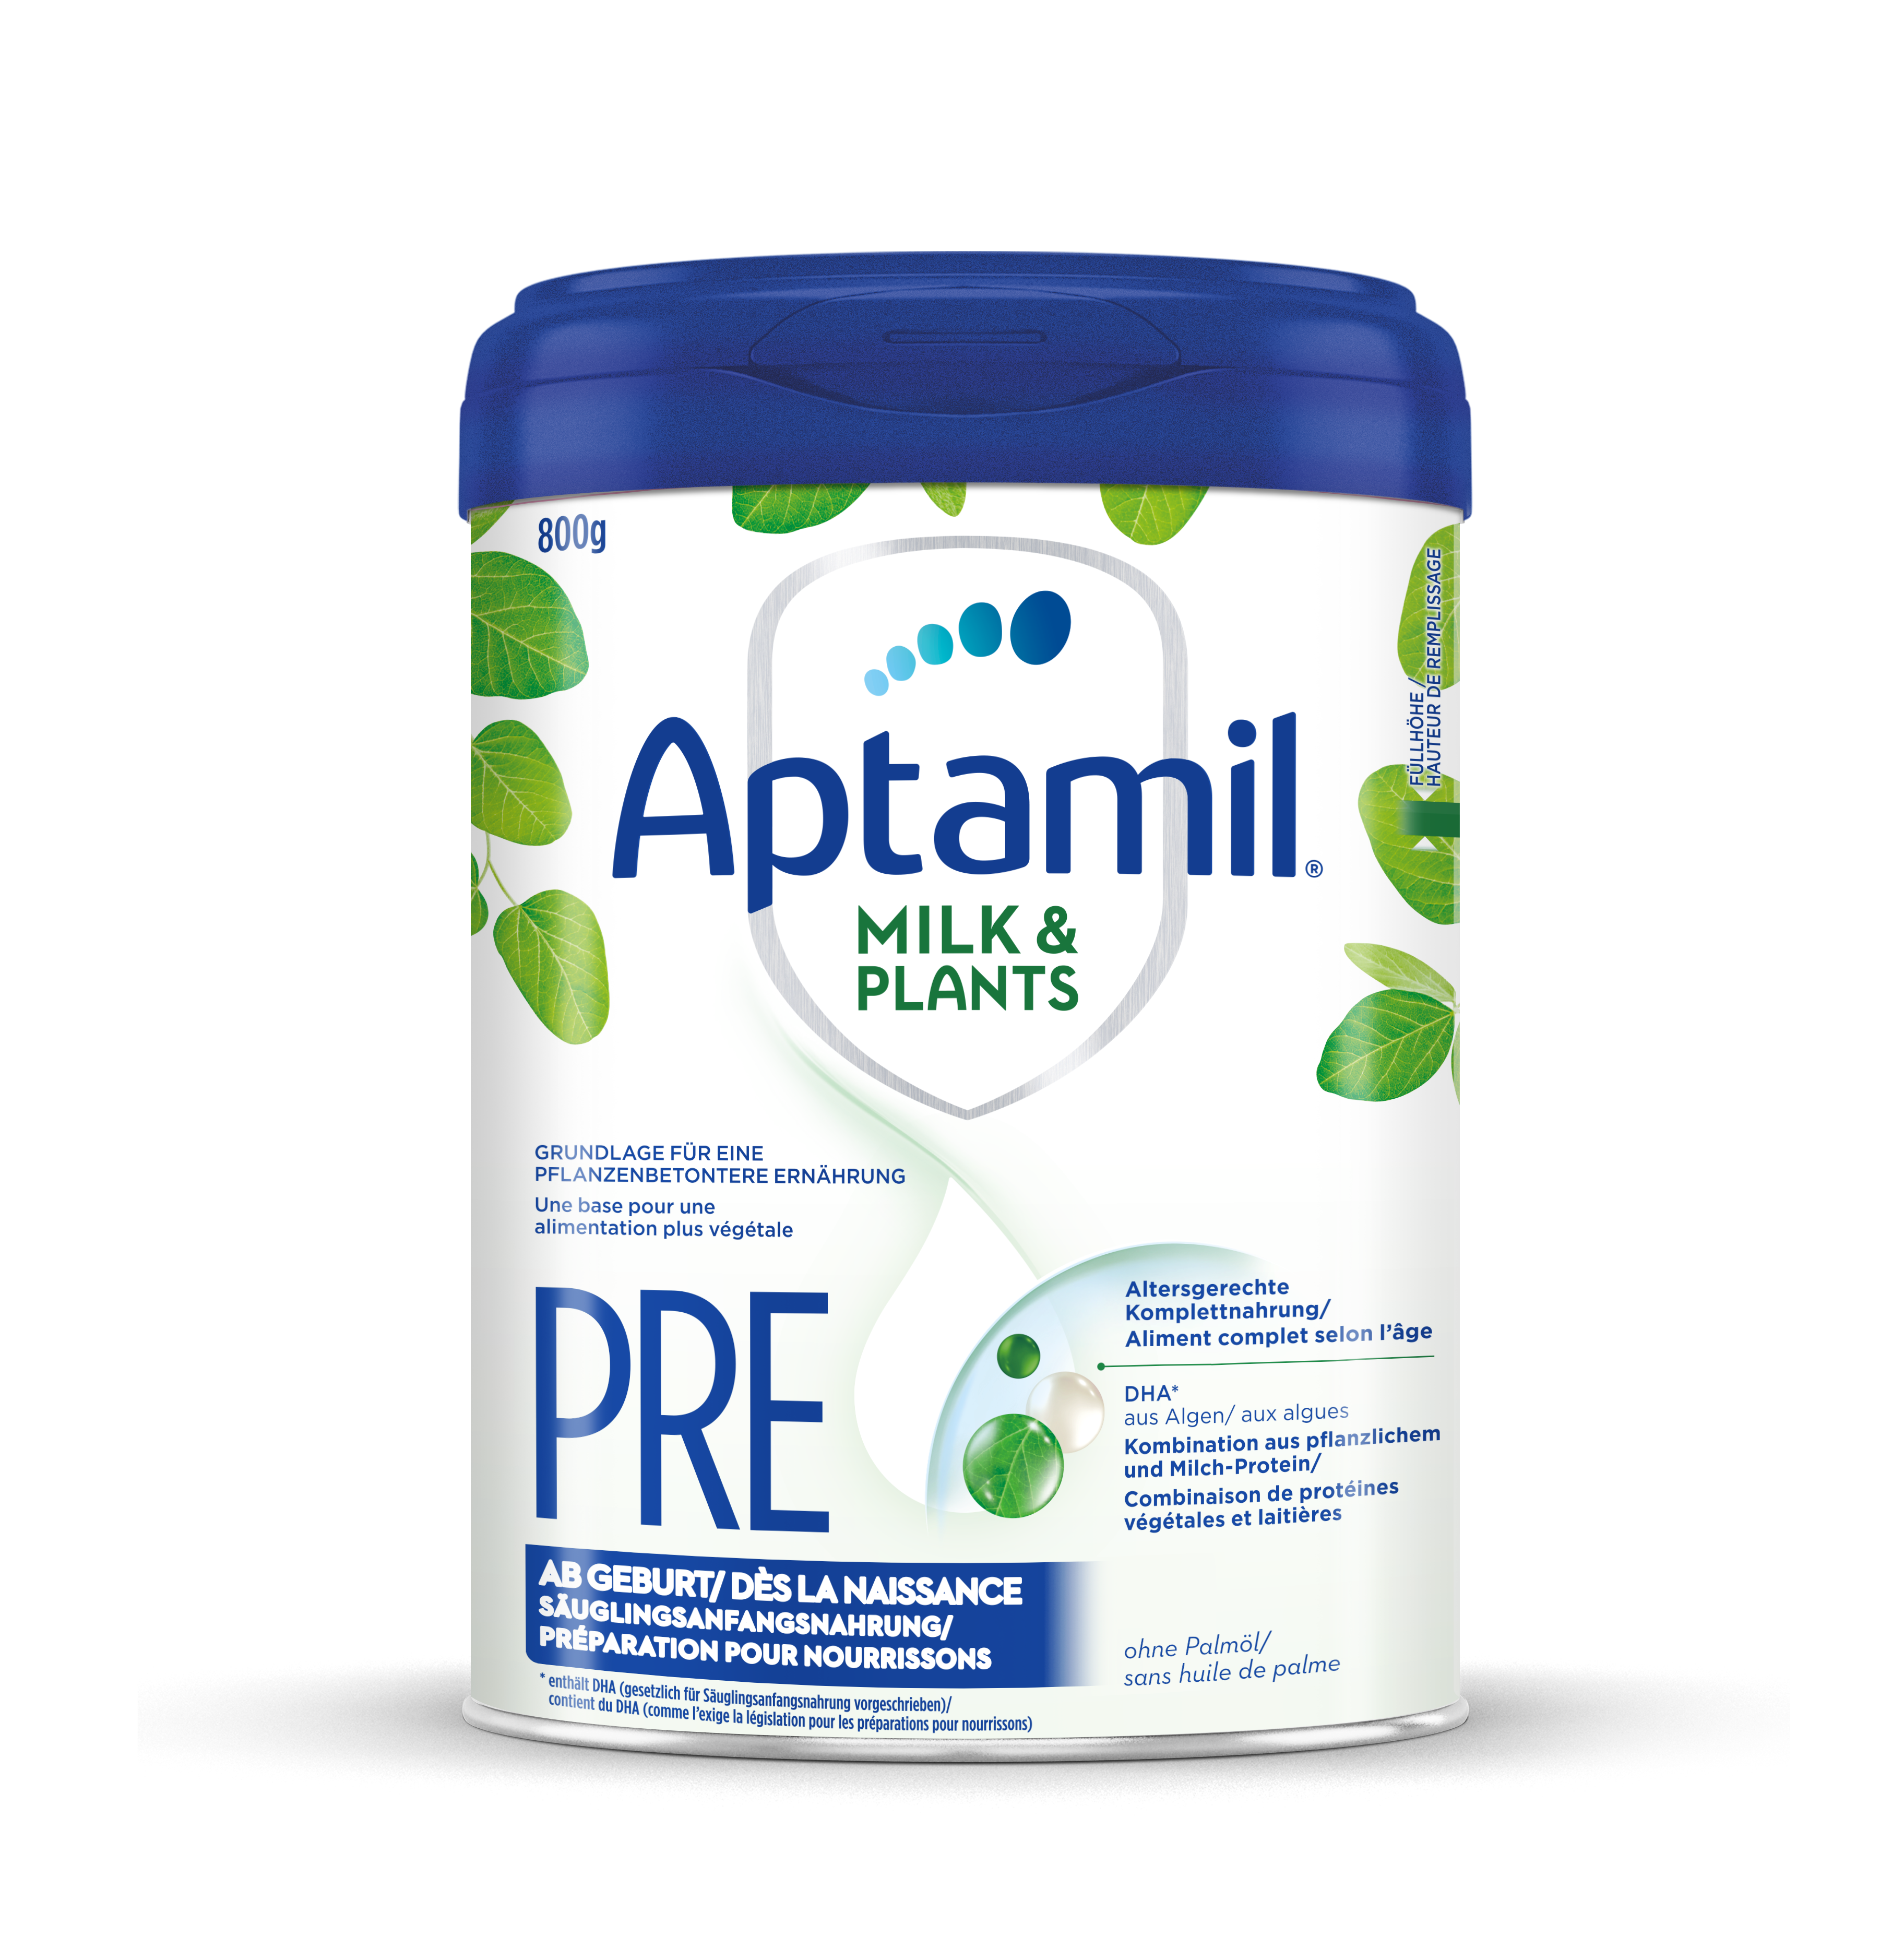 Aptamil Milk & Plants PRE